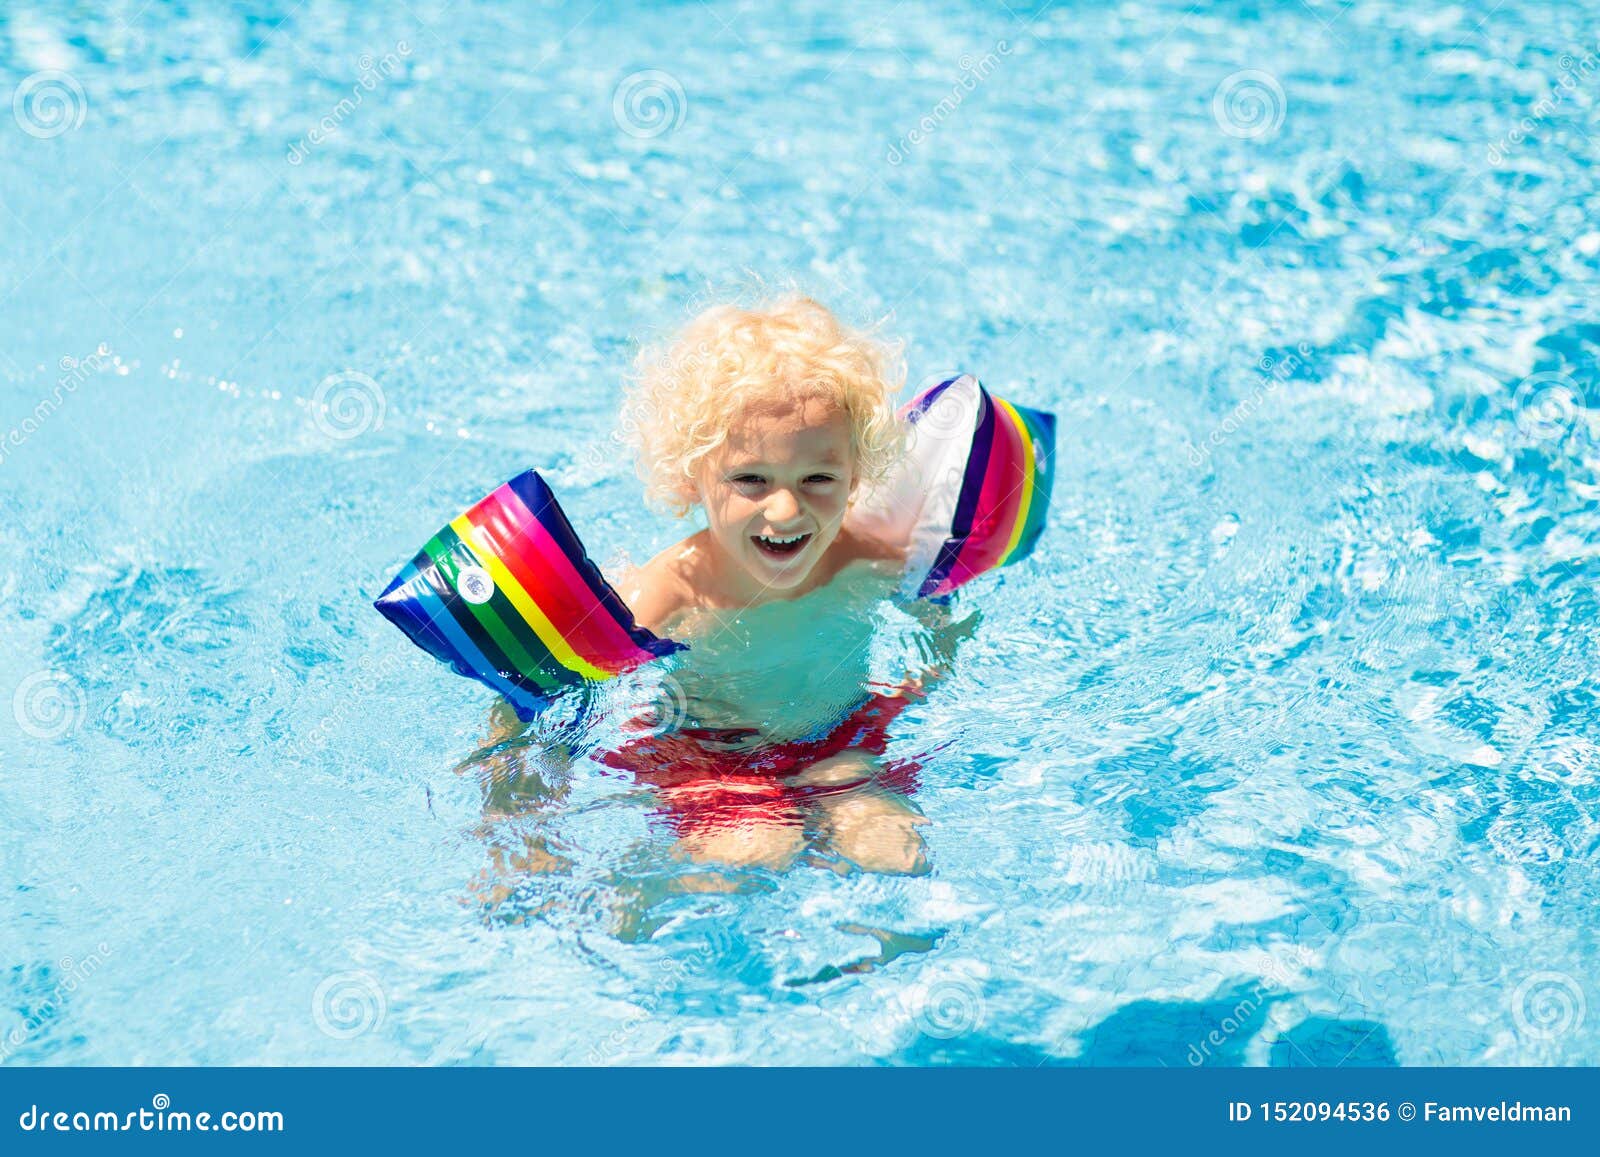 Swim Armband Inflatable Swimming Arm Band Kids Pool Float Armbands for Aftercare Swimming Training Orange 4pcs 